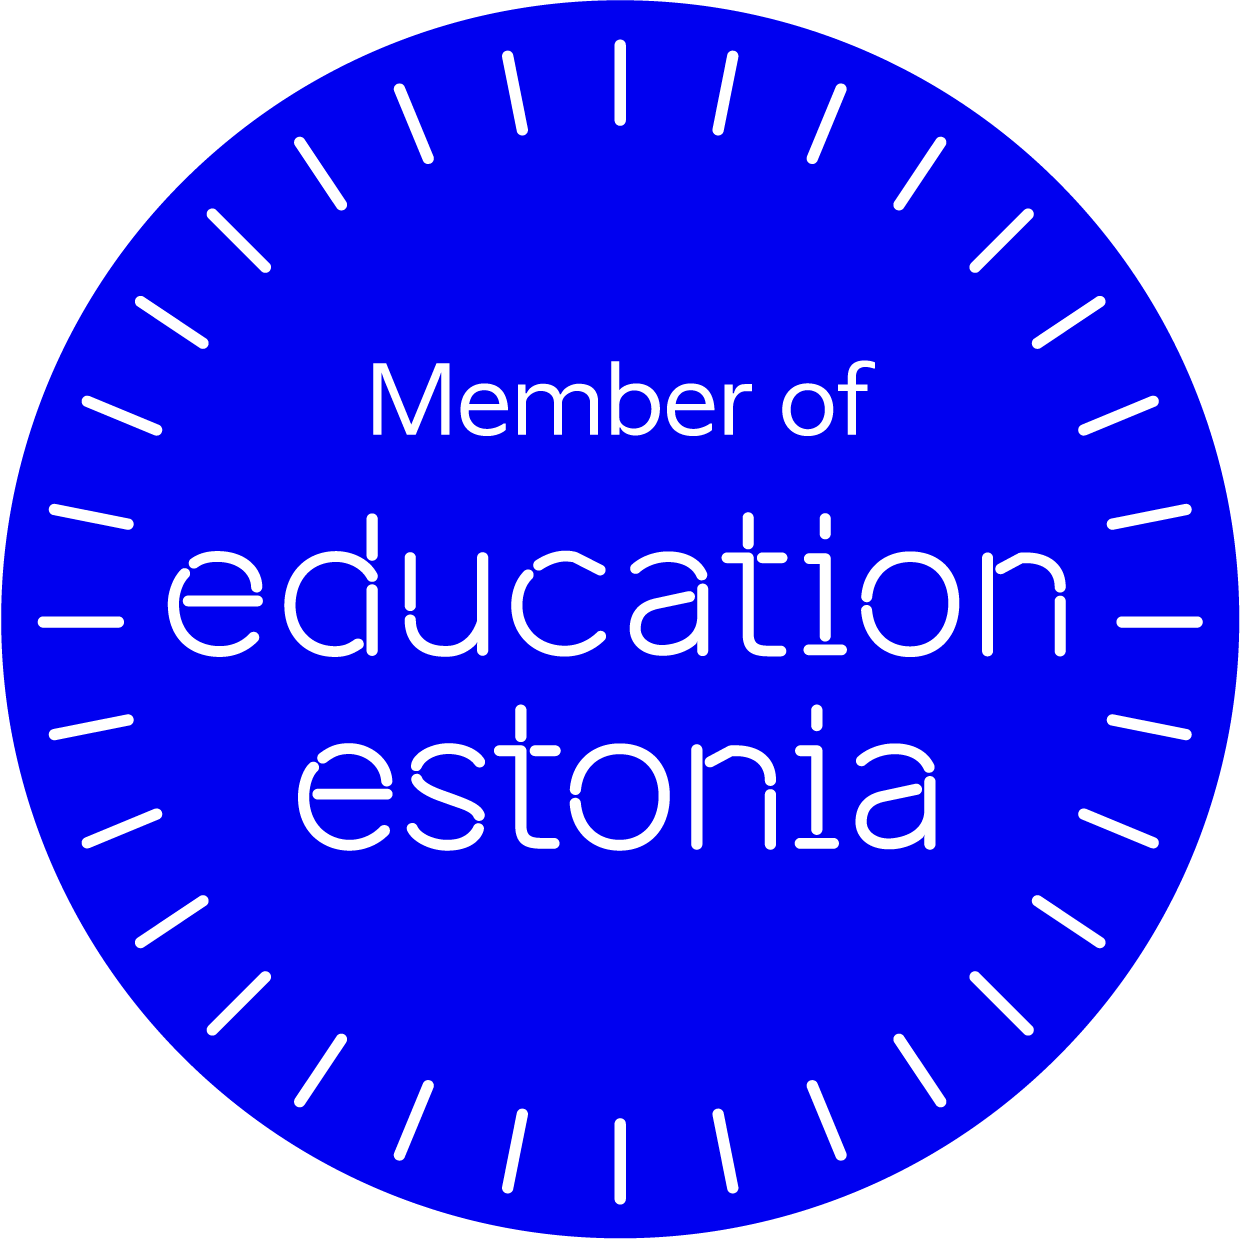 Education Estonia member logo